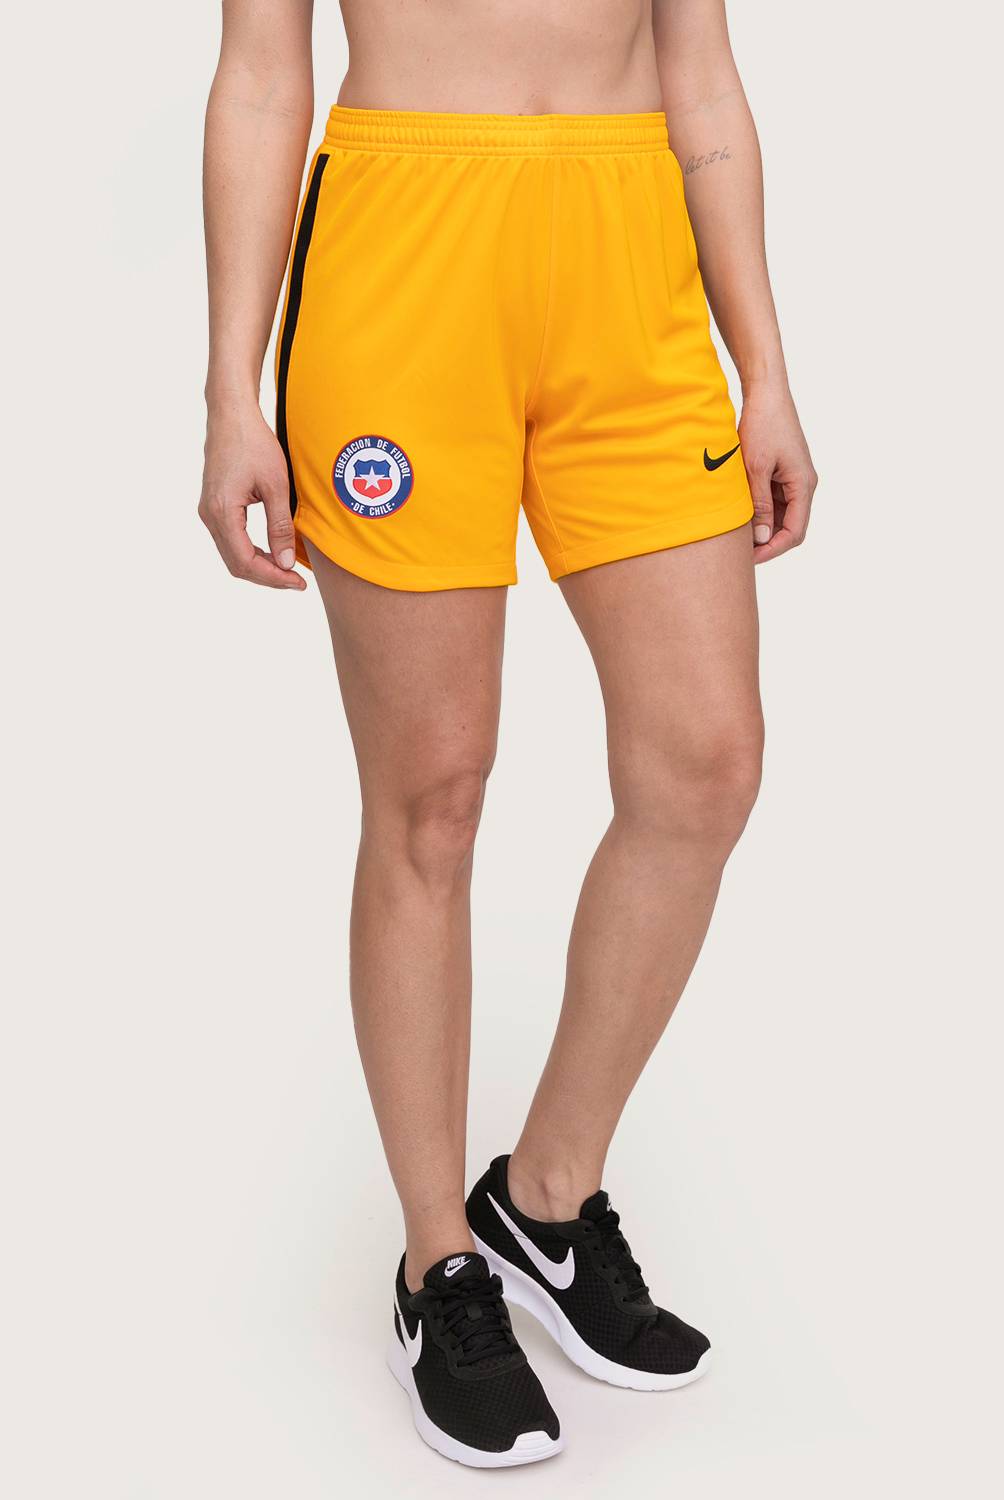 NIKE - Short Deportivo Fútbol Regular Fit Mujer Nike